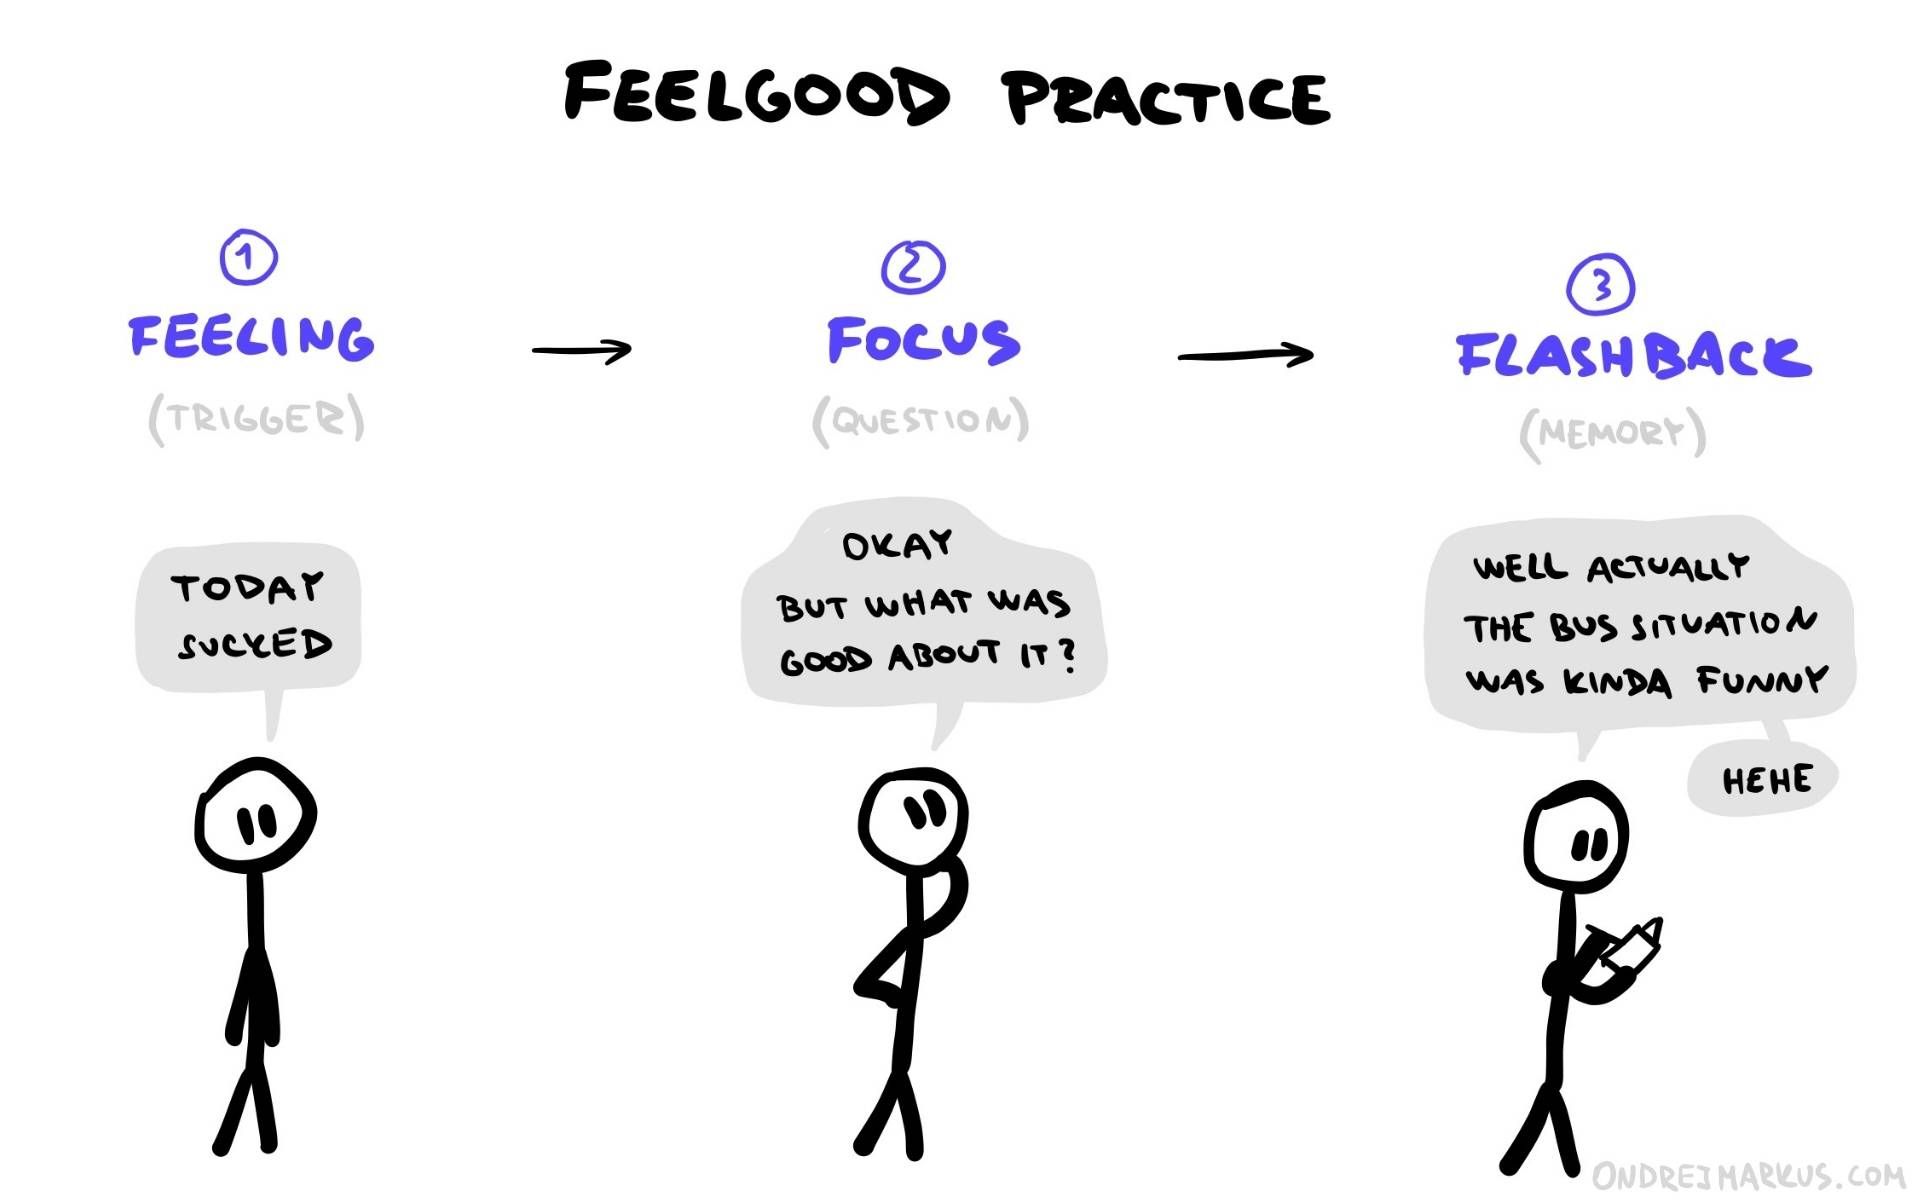 Feelgood practice increases self-awareness.